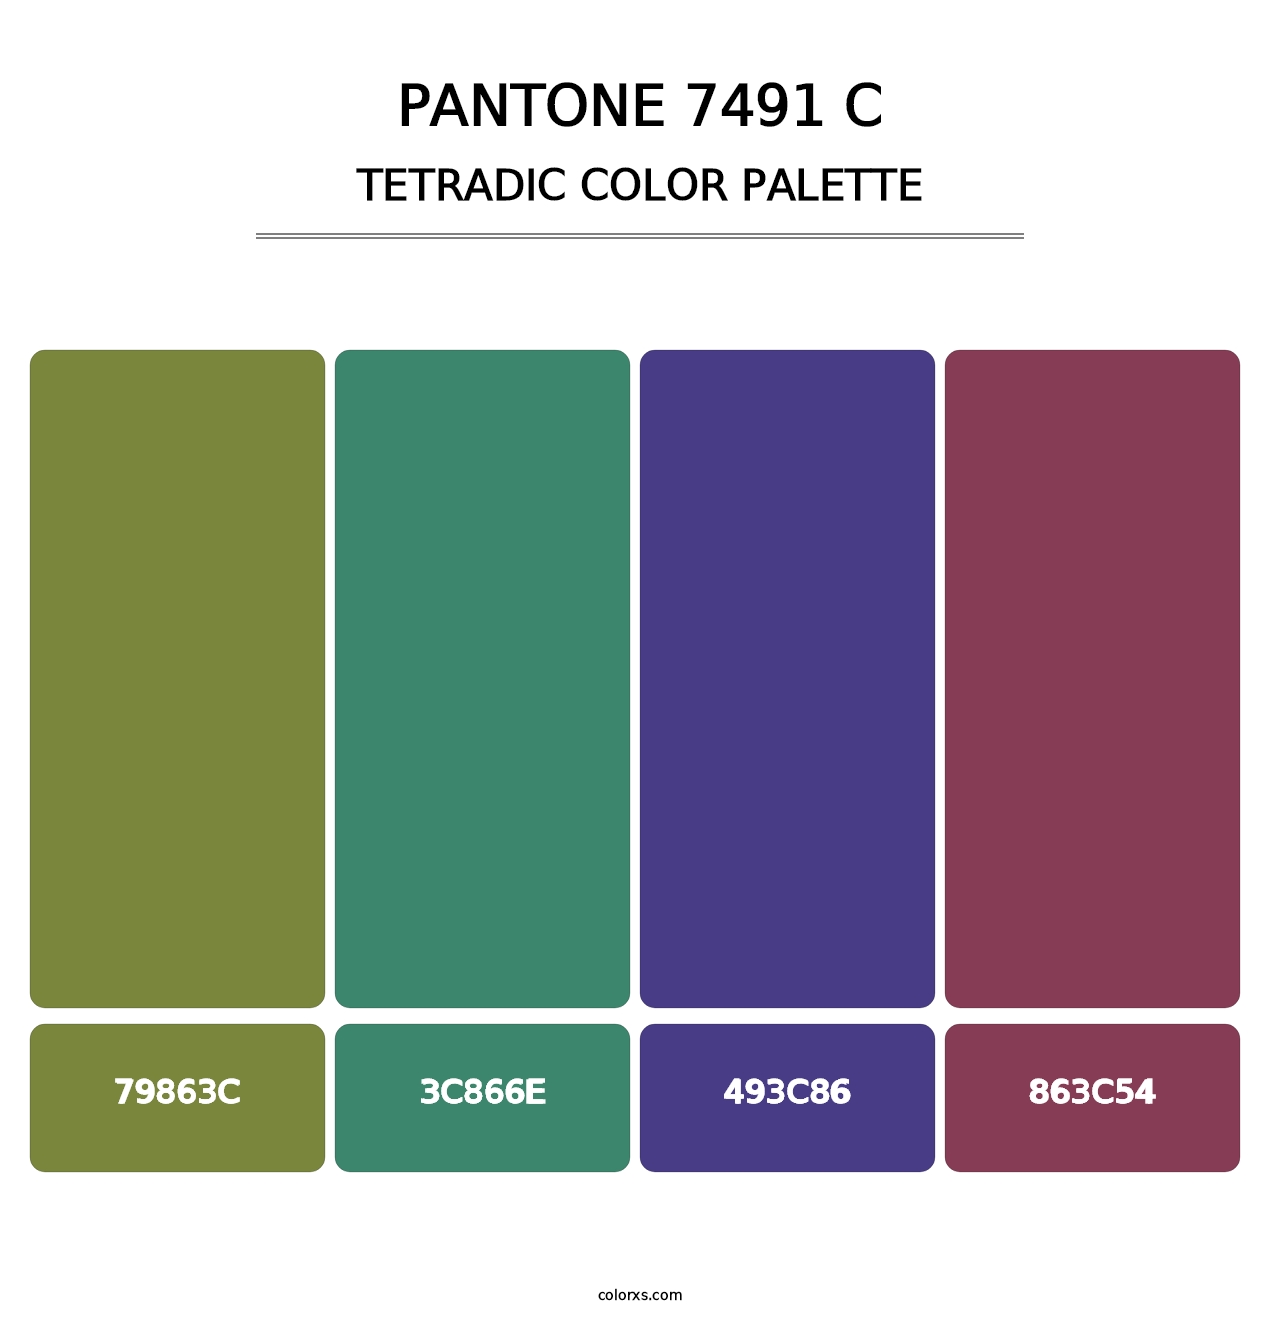 PANTONE 7491 C - Tetradic Color Palette